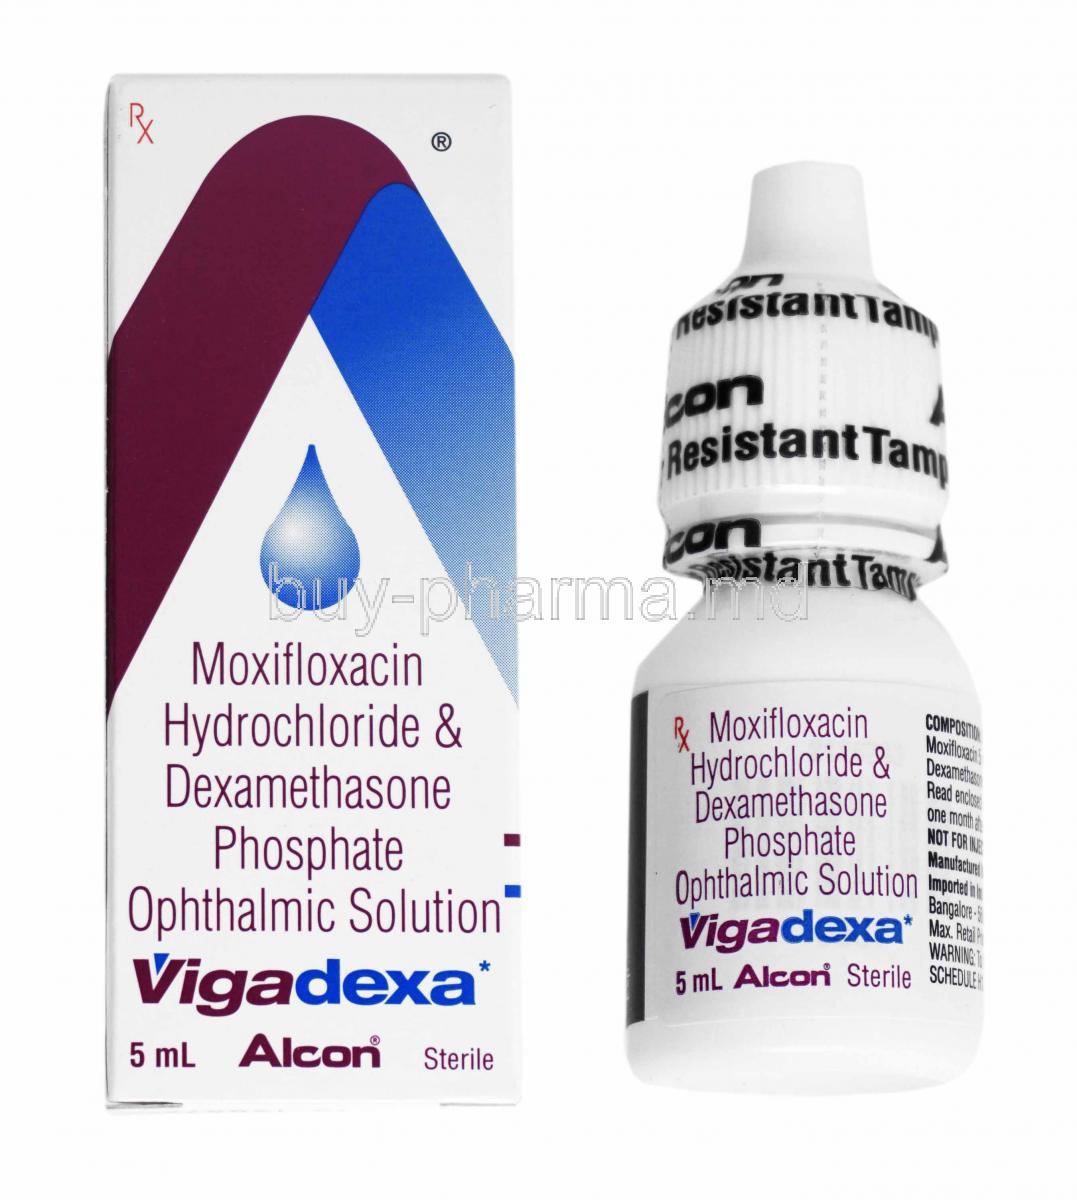 Vigadexa Ophthalmic Solution, Moxifloxacin and Dexamethasone box